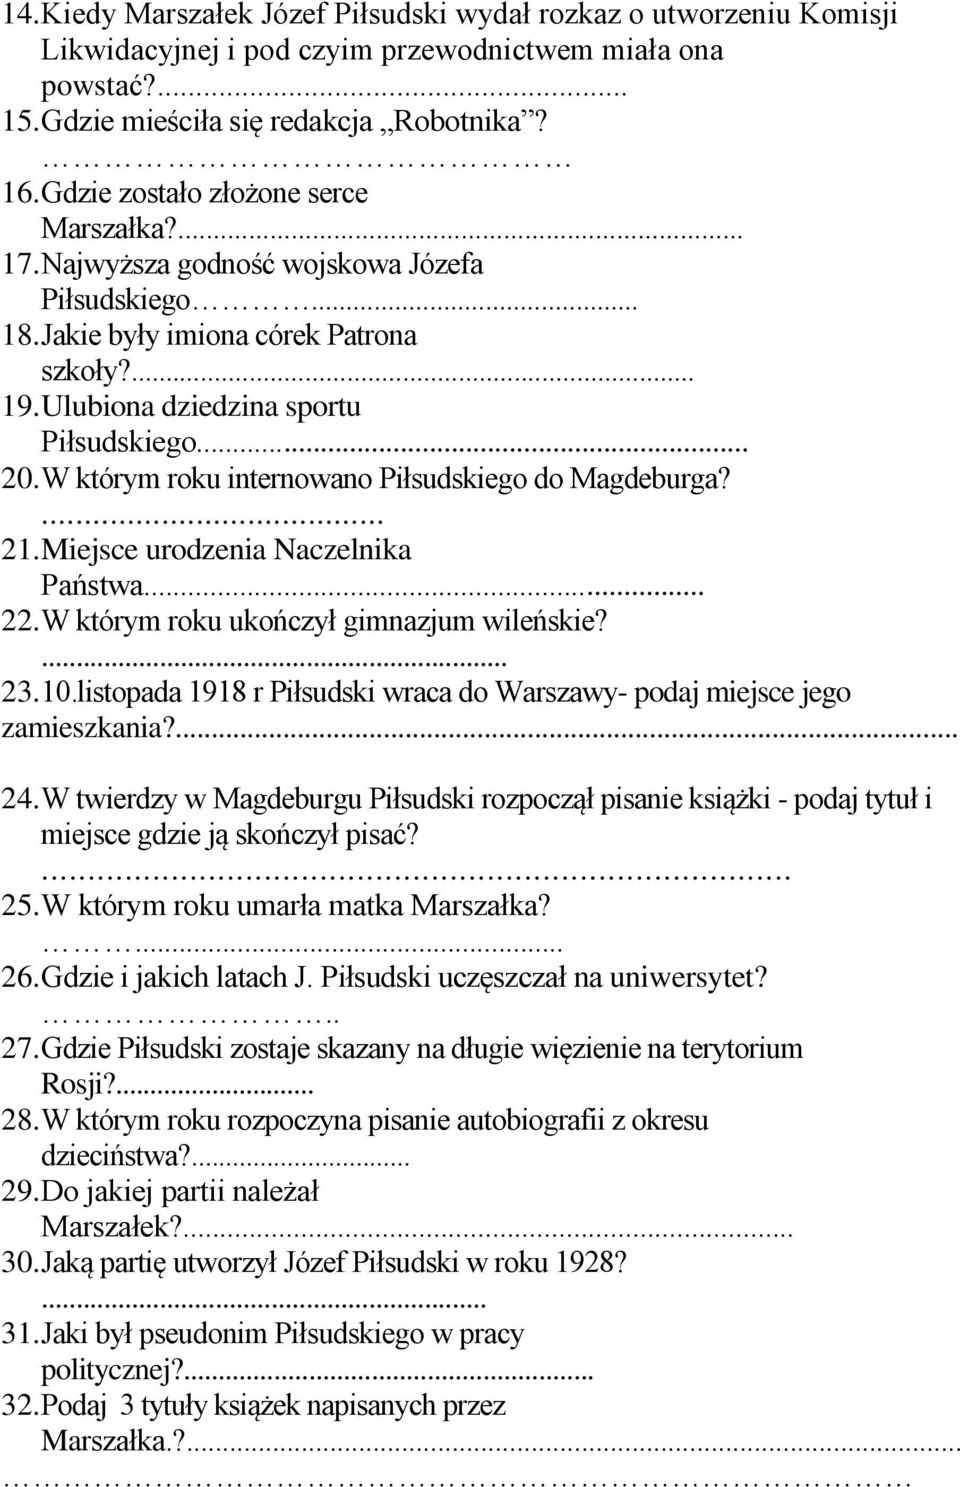 II ETAP KONKURSU O JÓZEFIE PIŁSUDSKIM - PDF Free Download